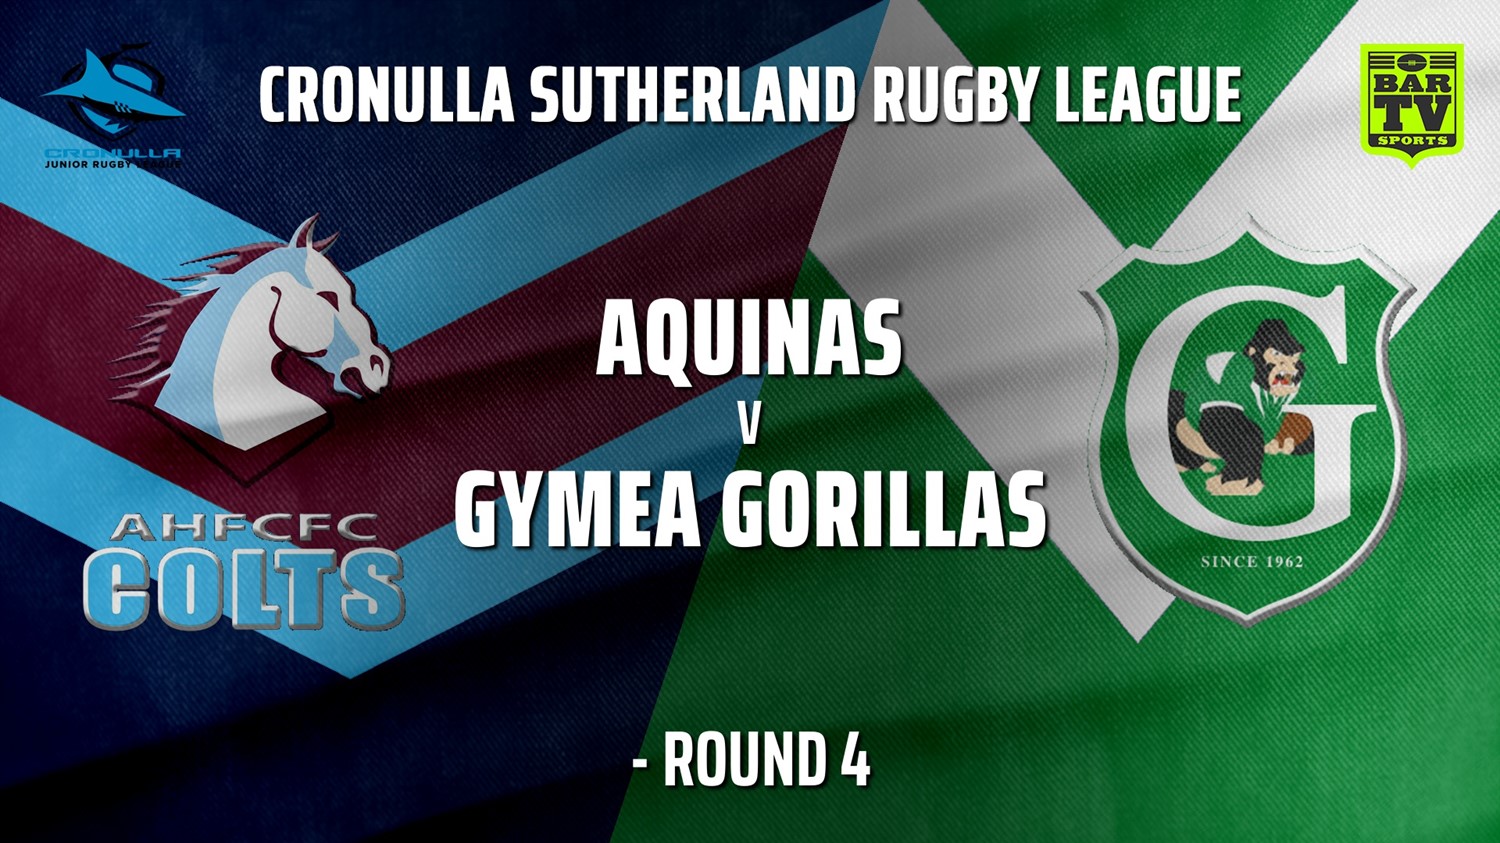 210523-Cronulla JRL Under 17s Silver Round 4 - Aquinas Colts v Gymea Gorillas Minigame Slate Image